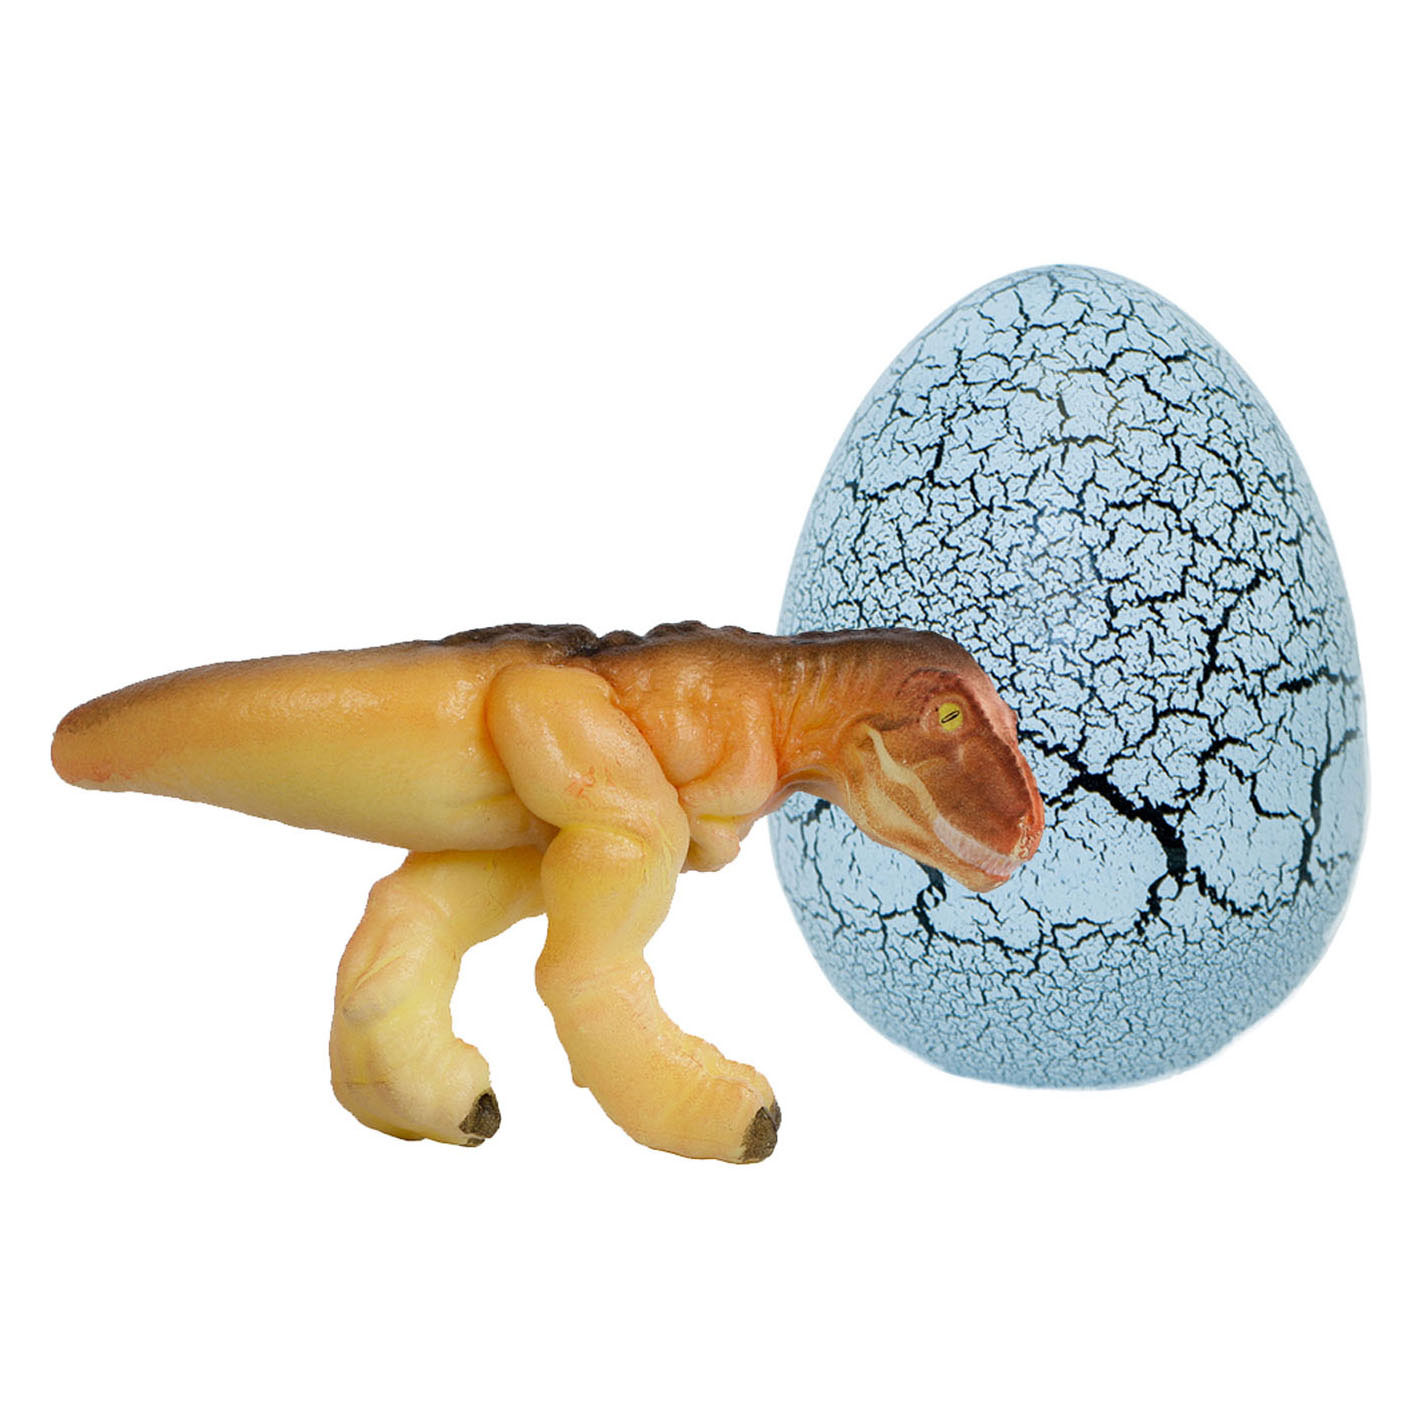 Dinoworld Méga œuf de dinosaure en croissance, 20 cm